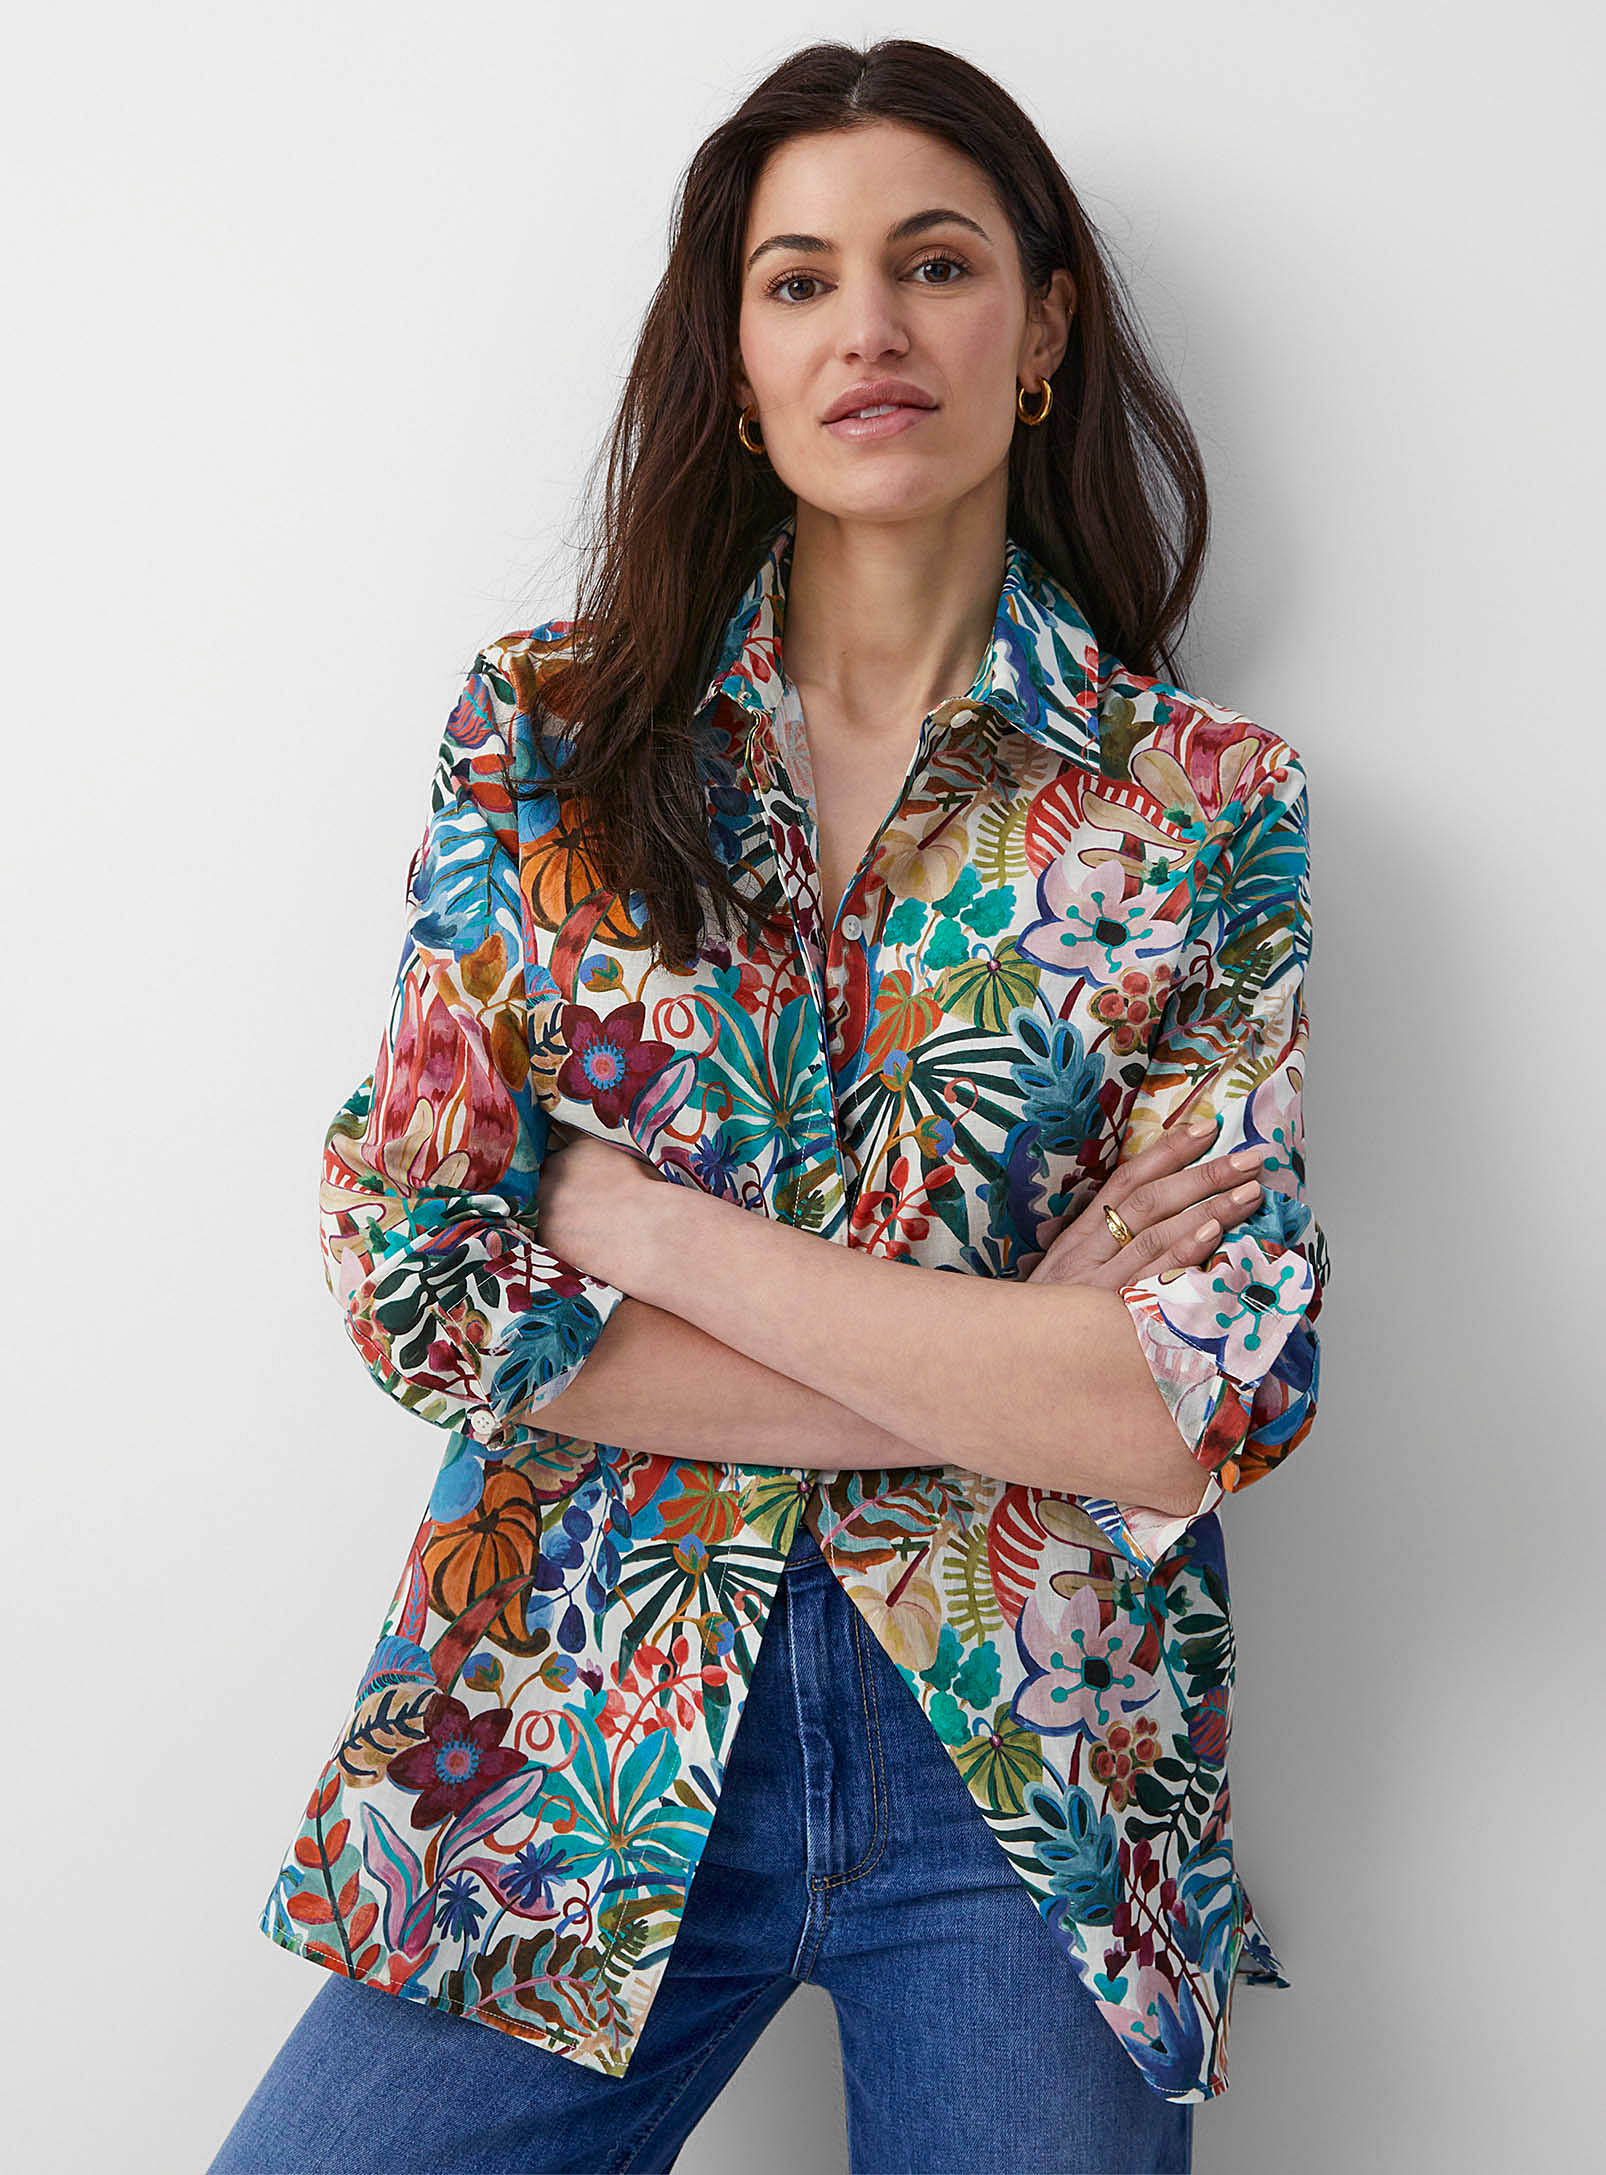 Contemporaine - Women's Lush garden cotton-linen Tunic Top Made with Liberty fabric